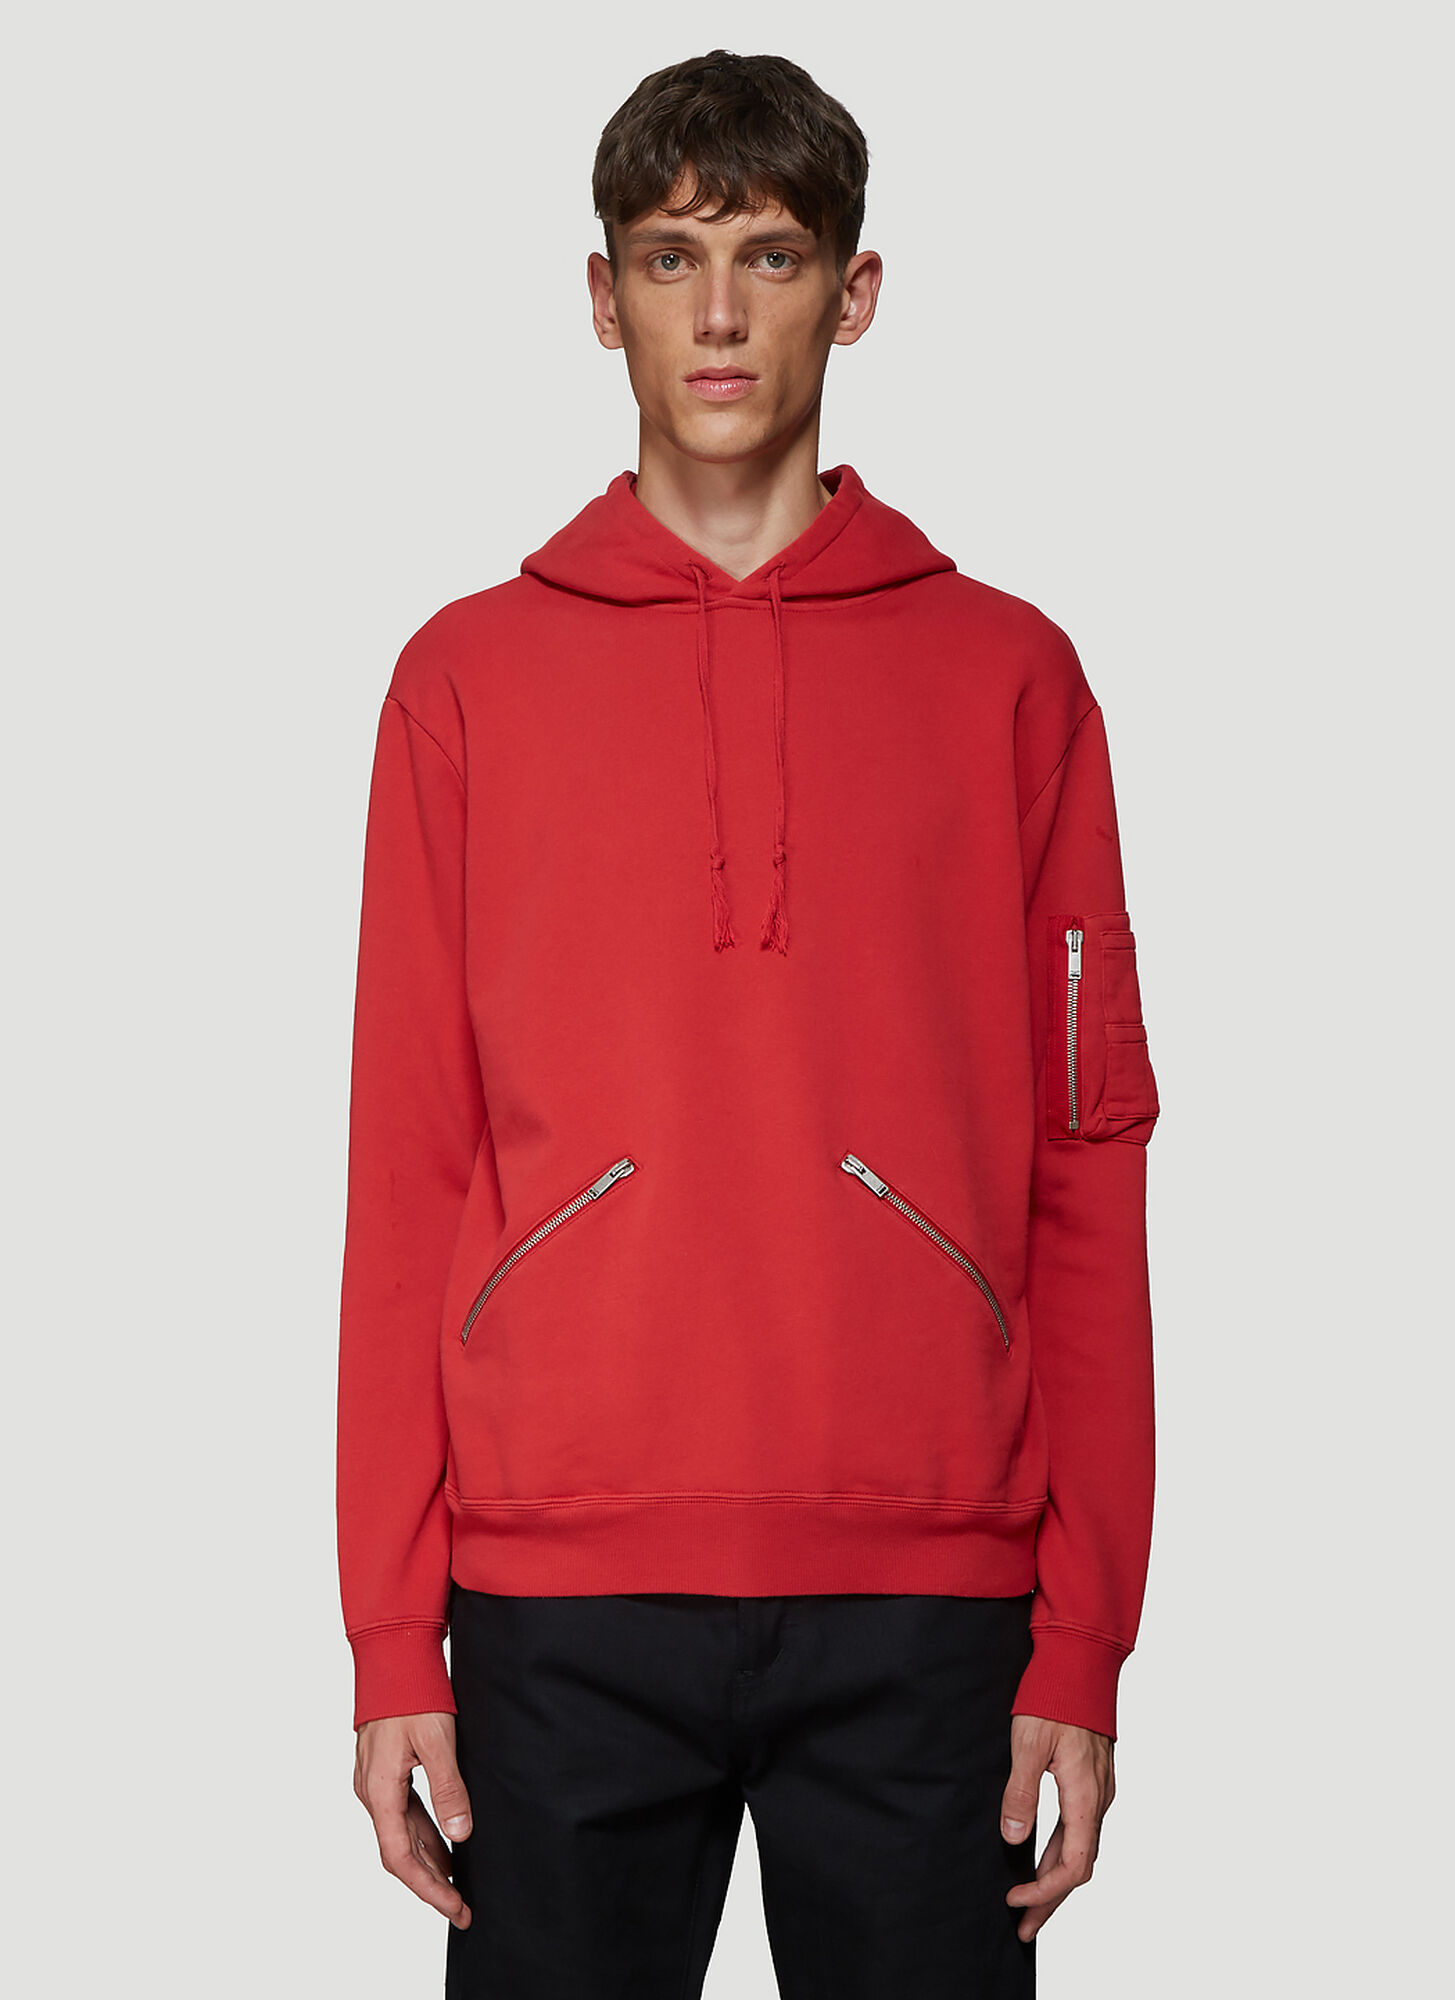 Saint Laurent Zip Pocket Hooded Sweatshirt in Red size M | The Fashionisto